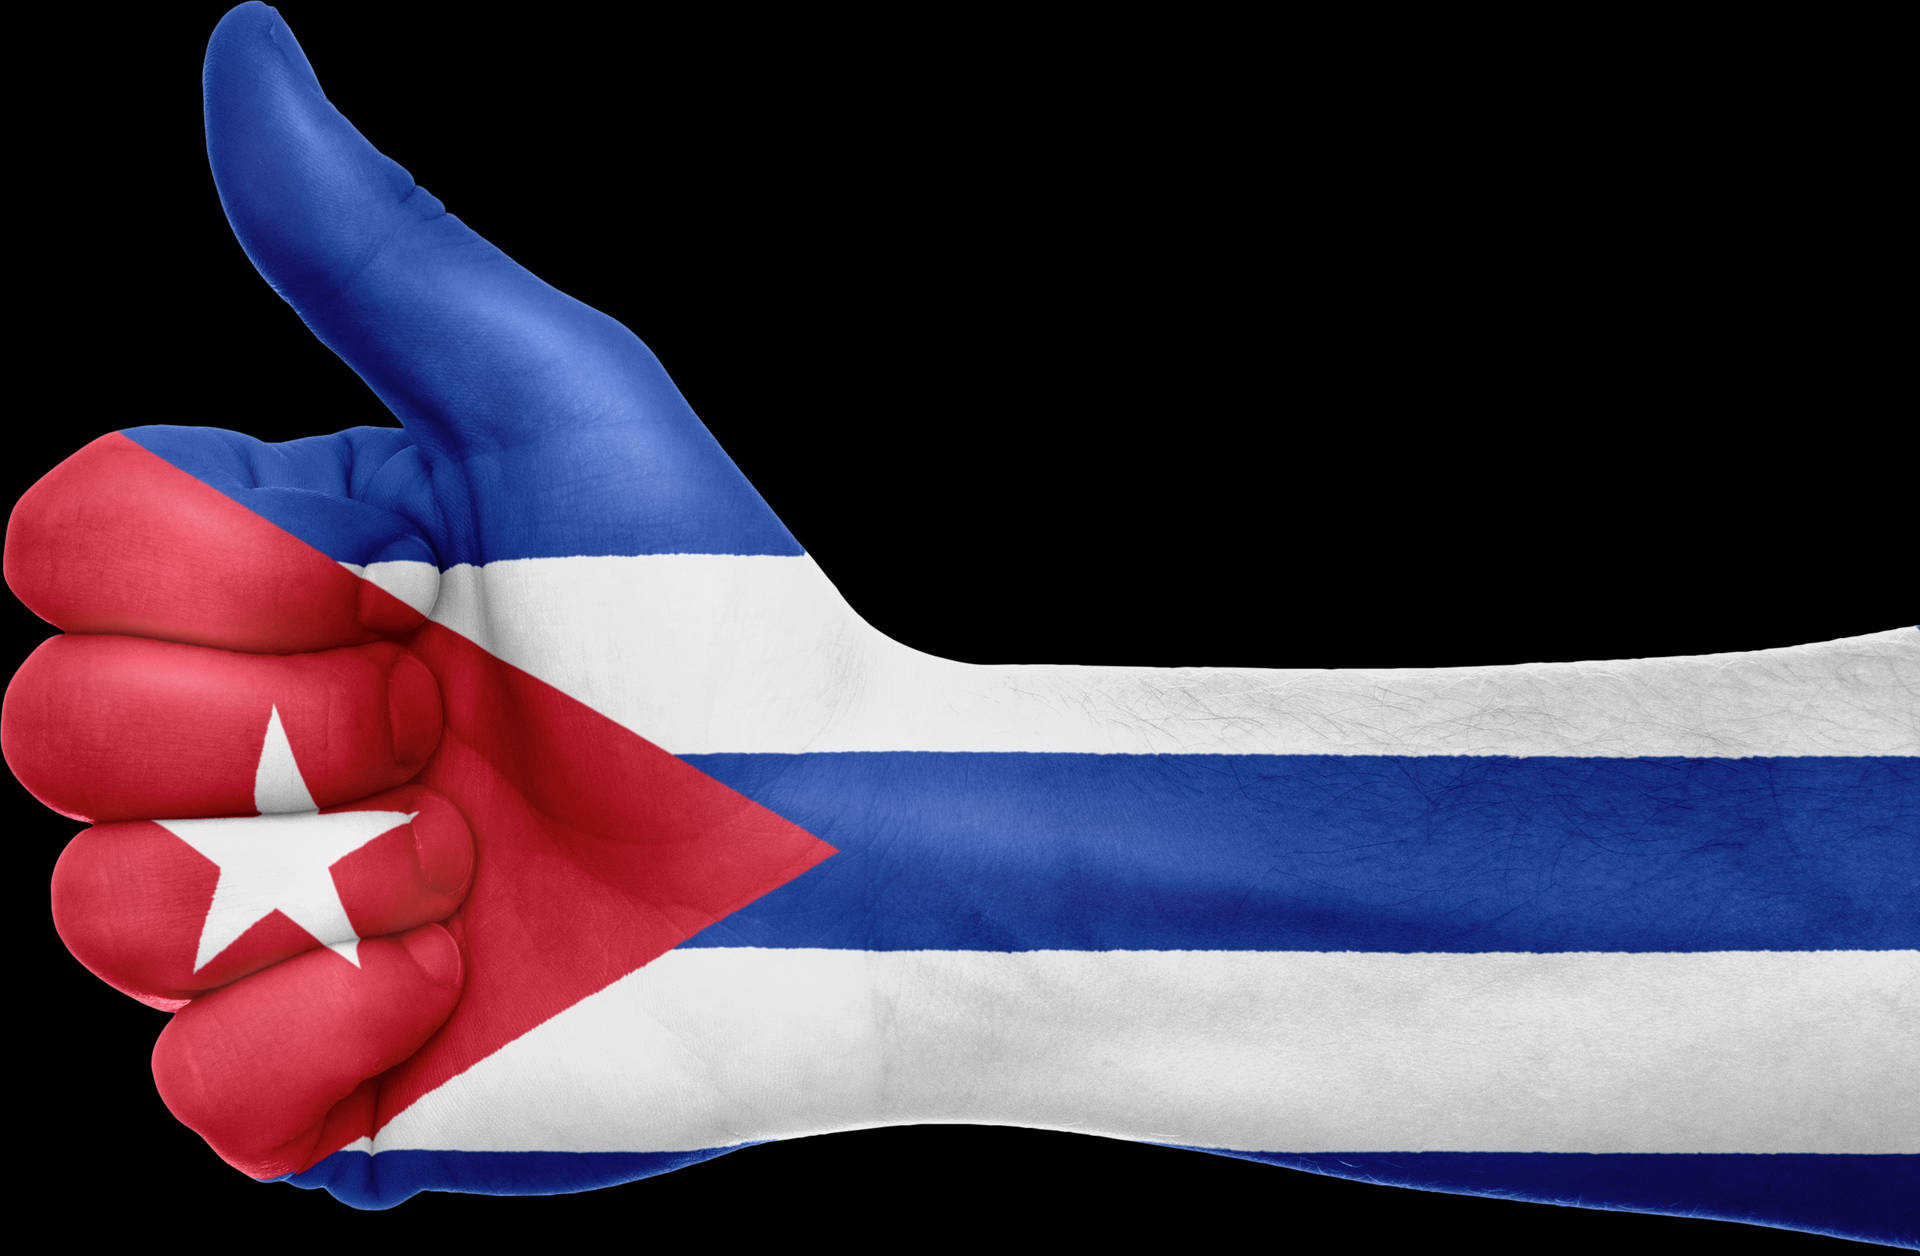 Cuban Flag Thumbs Up Sign